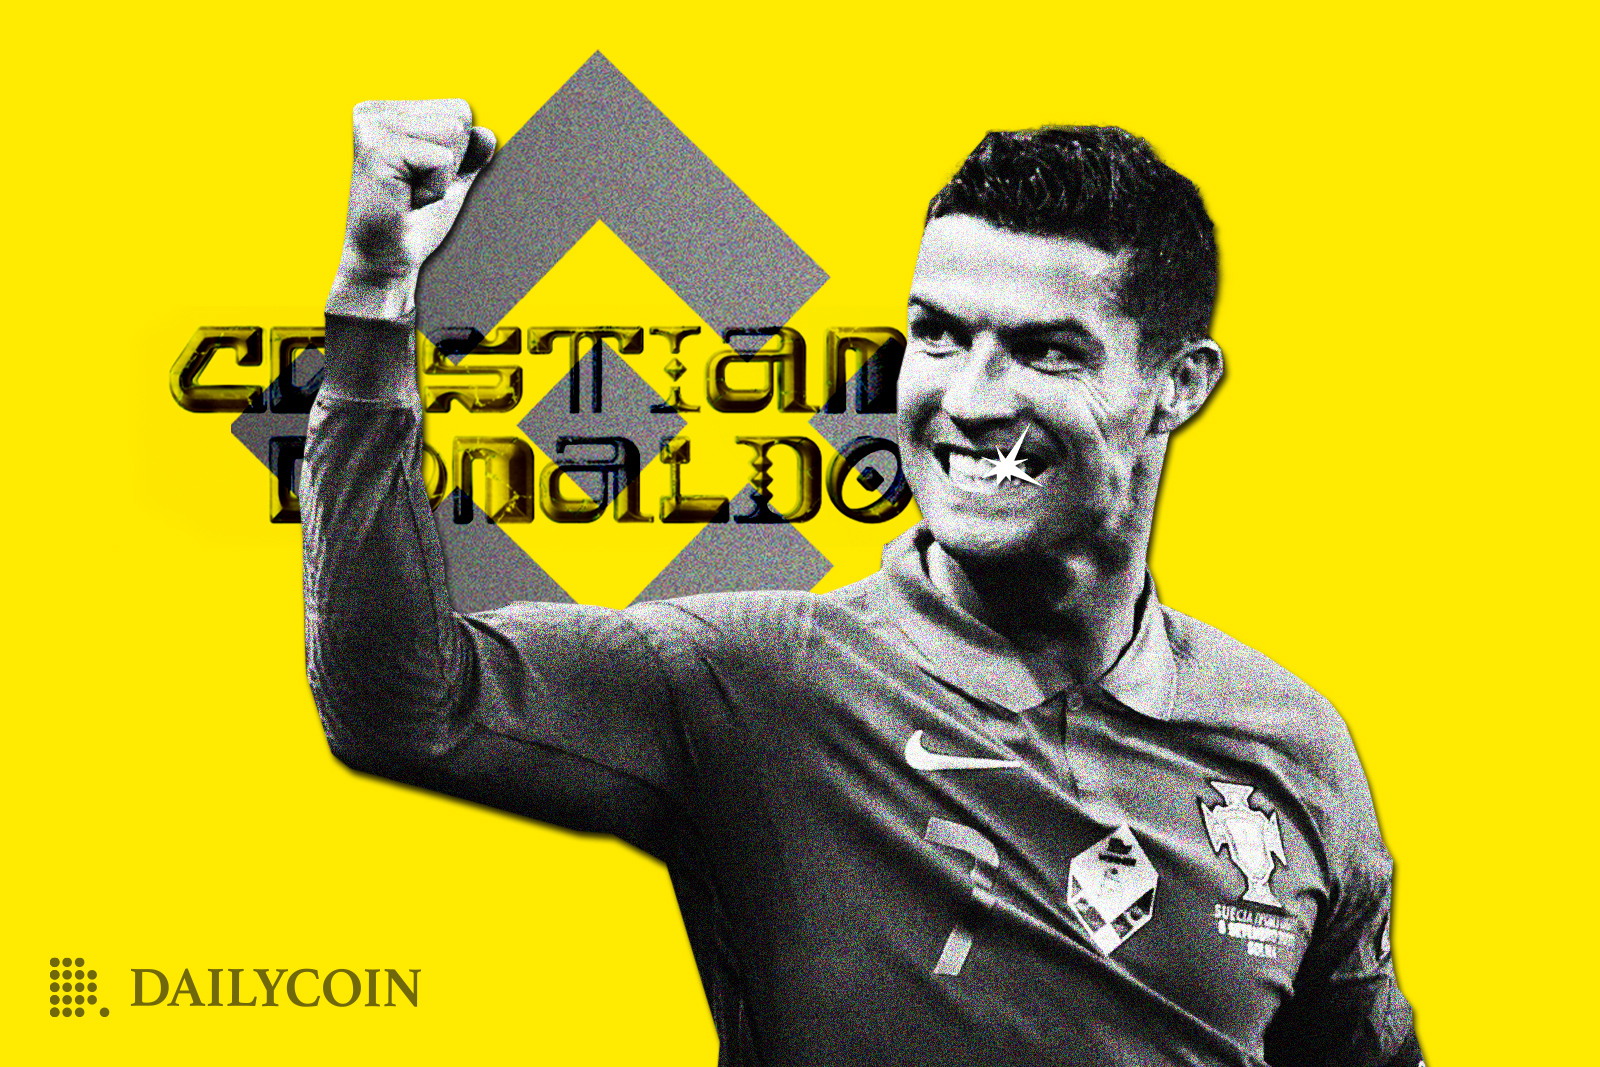 Happy football star Christiano Ronaldo on a yellow background